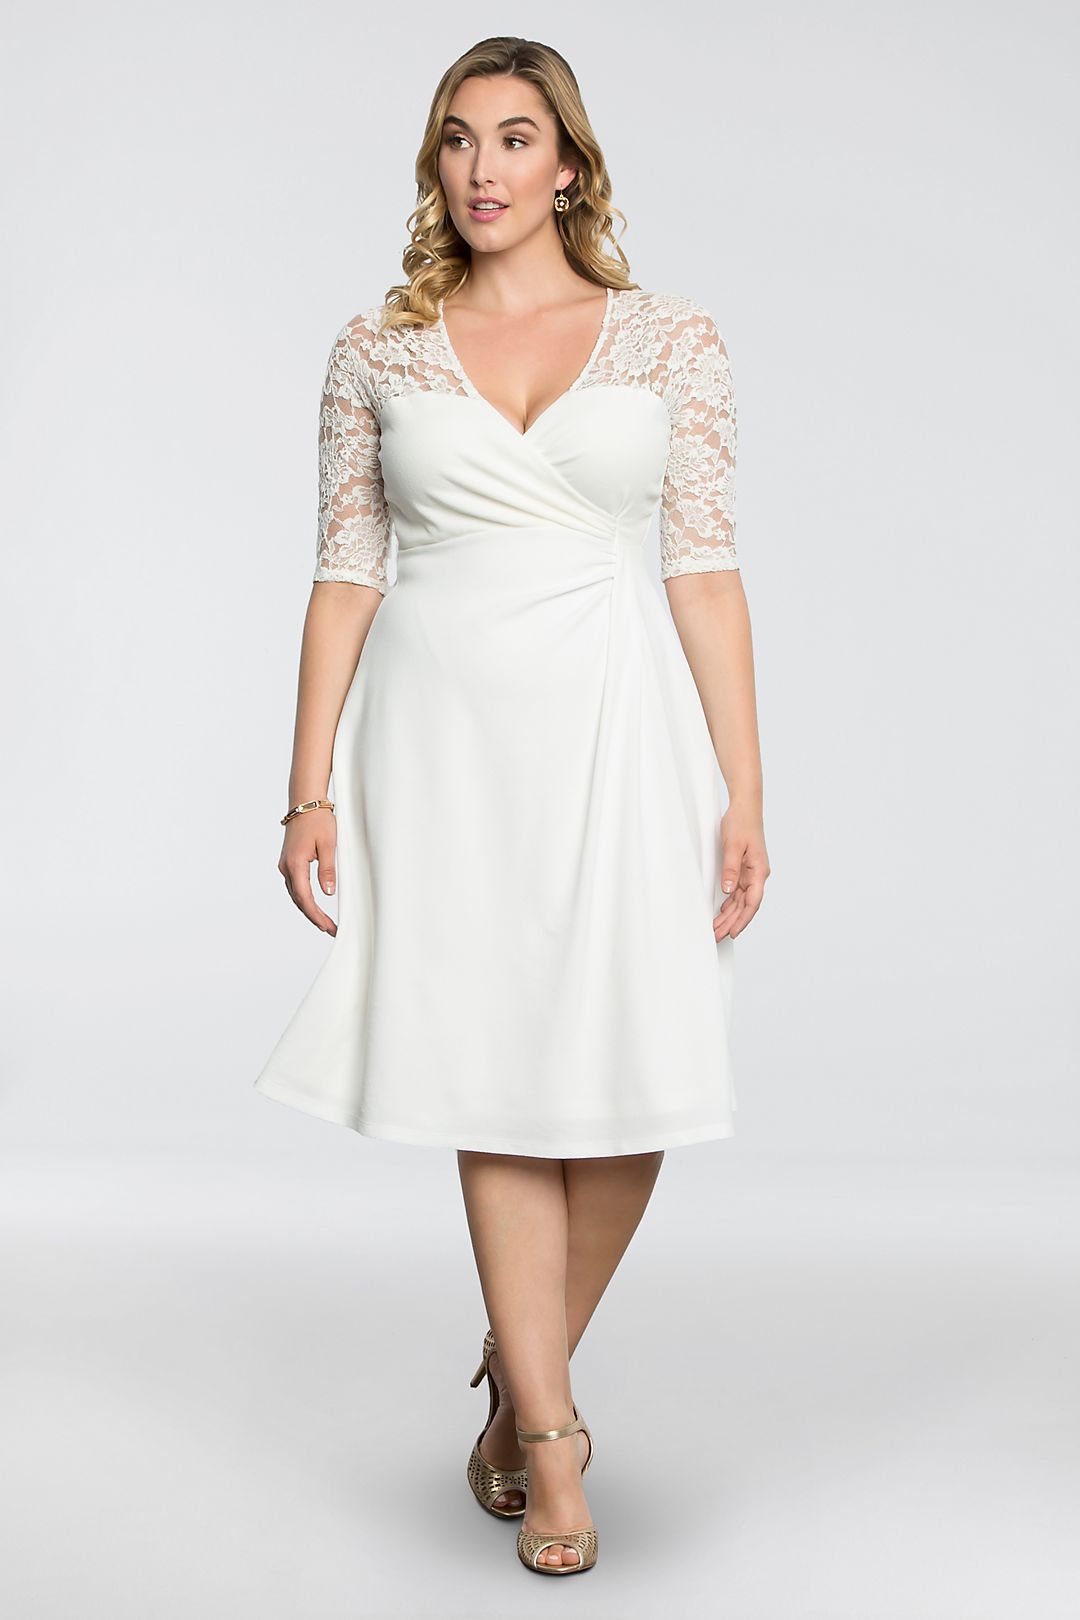 Lavish Lace Plus Size Dress Image 3